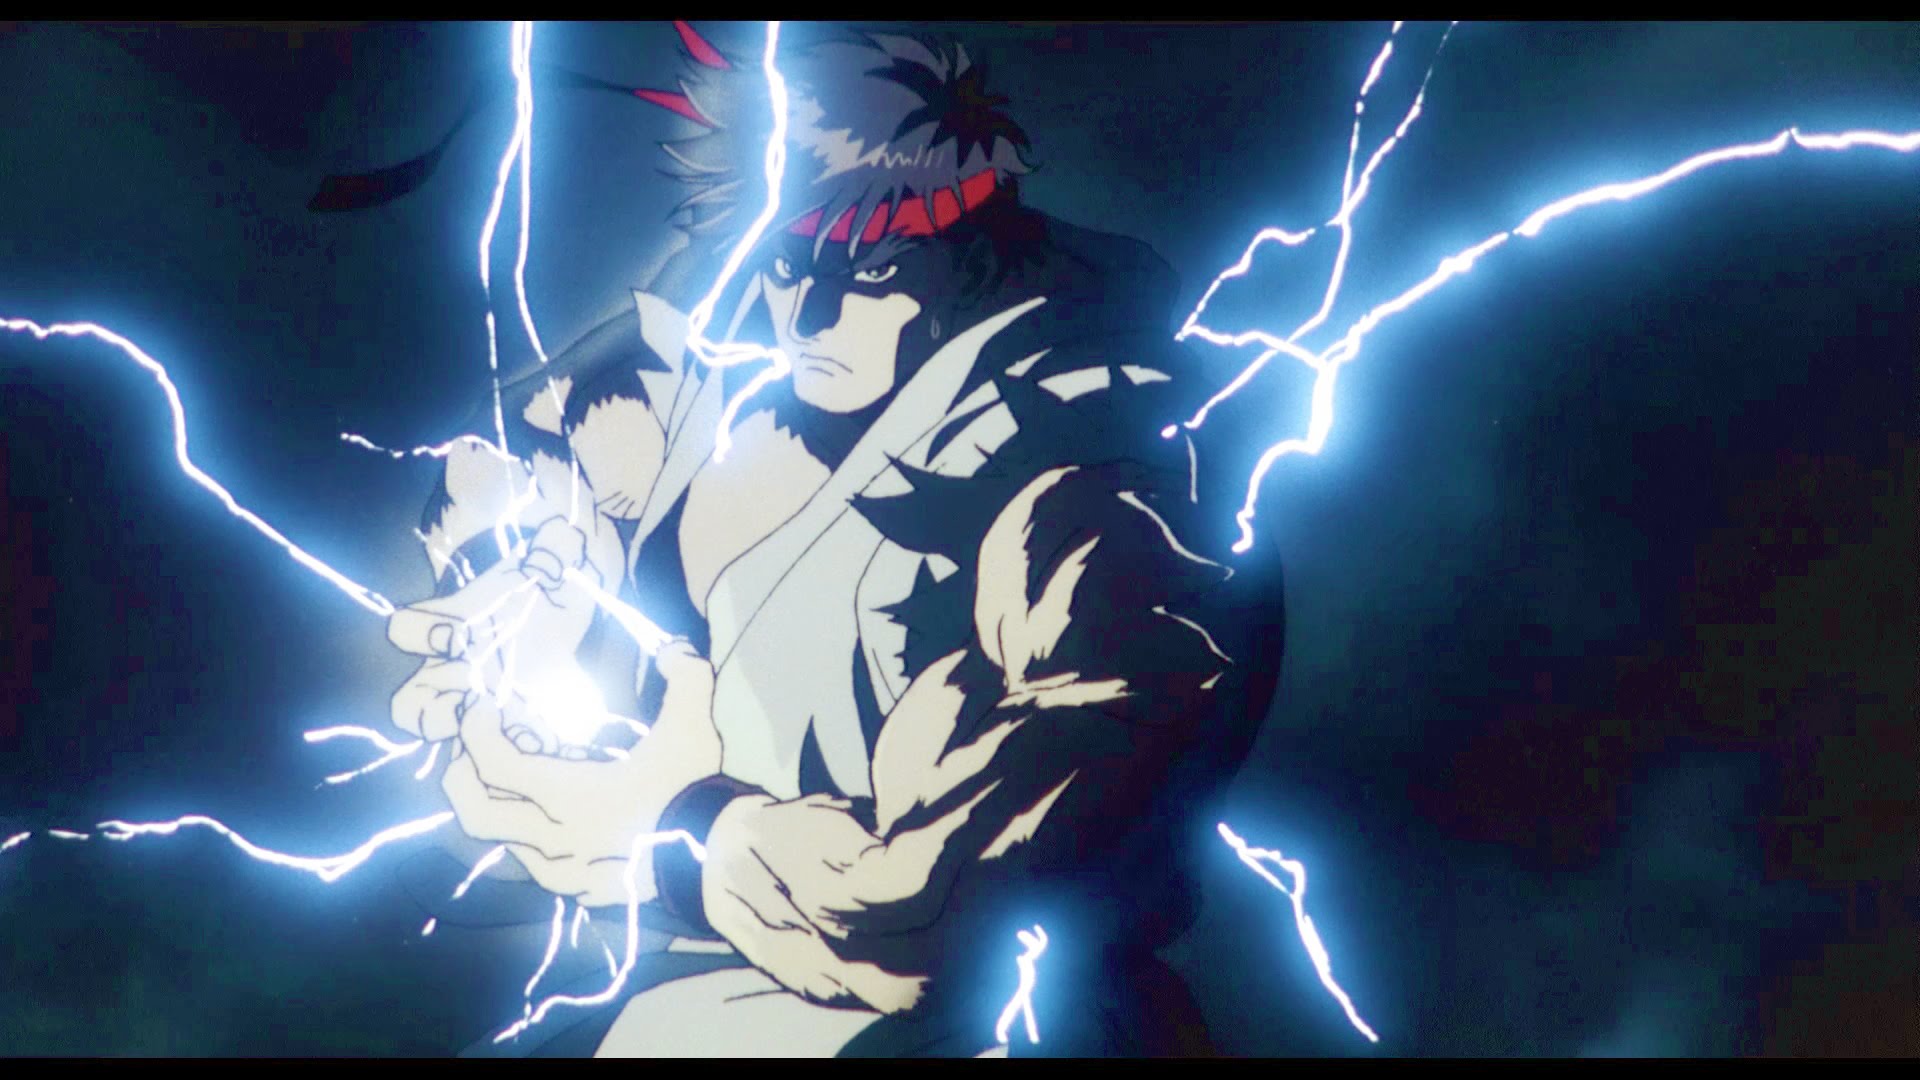 ryu street fighter wallpaper,lightning,cg artwork,anime,fictional character,sky